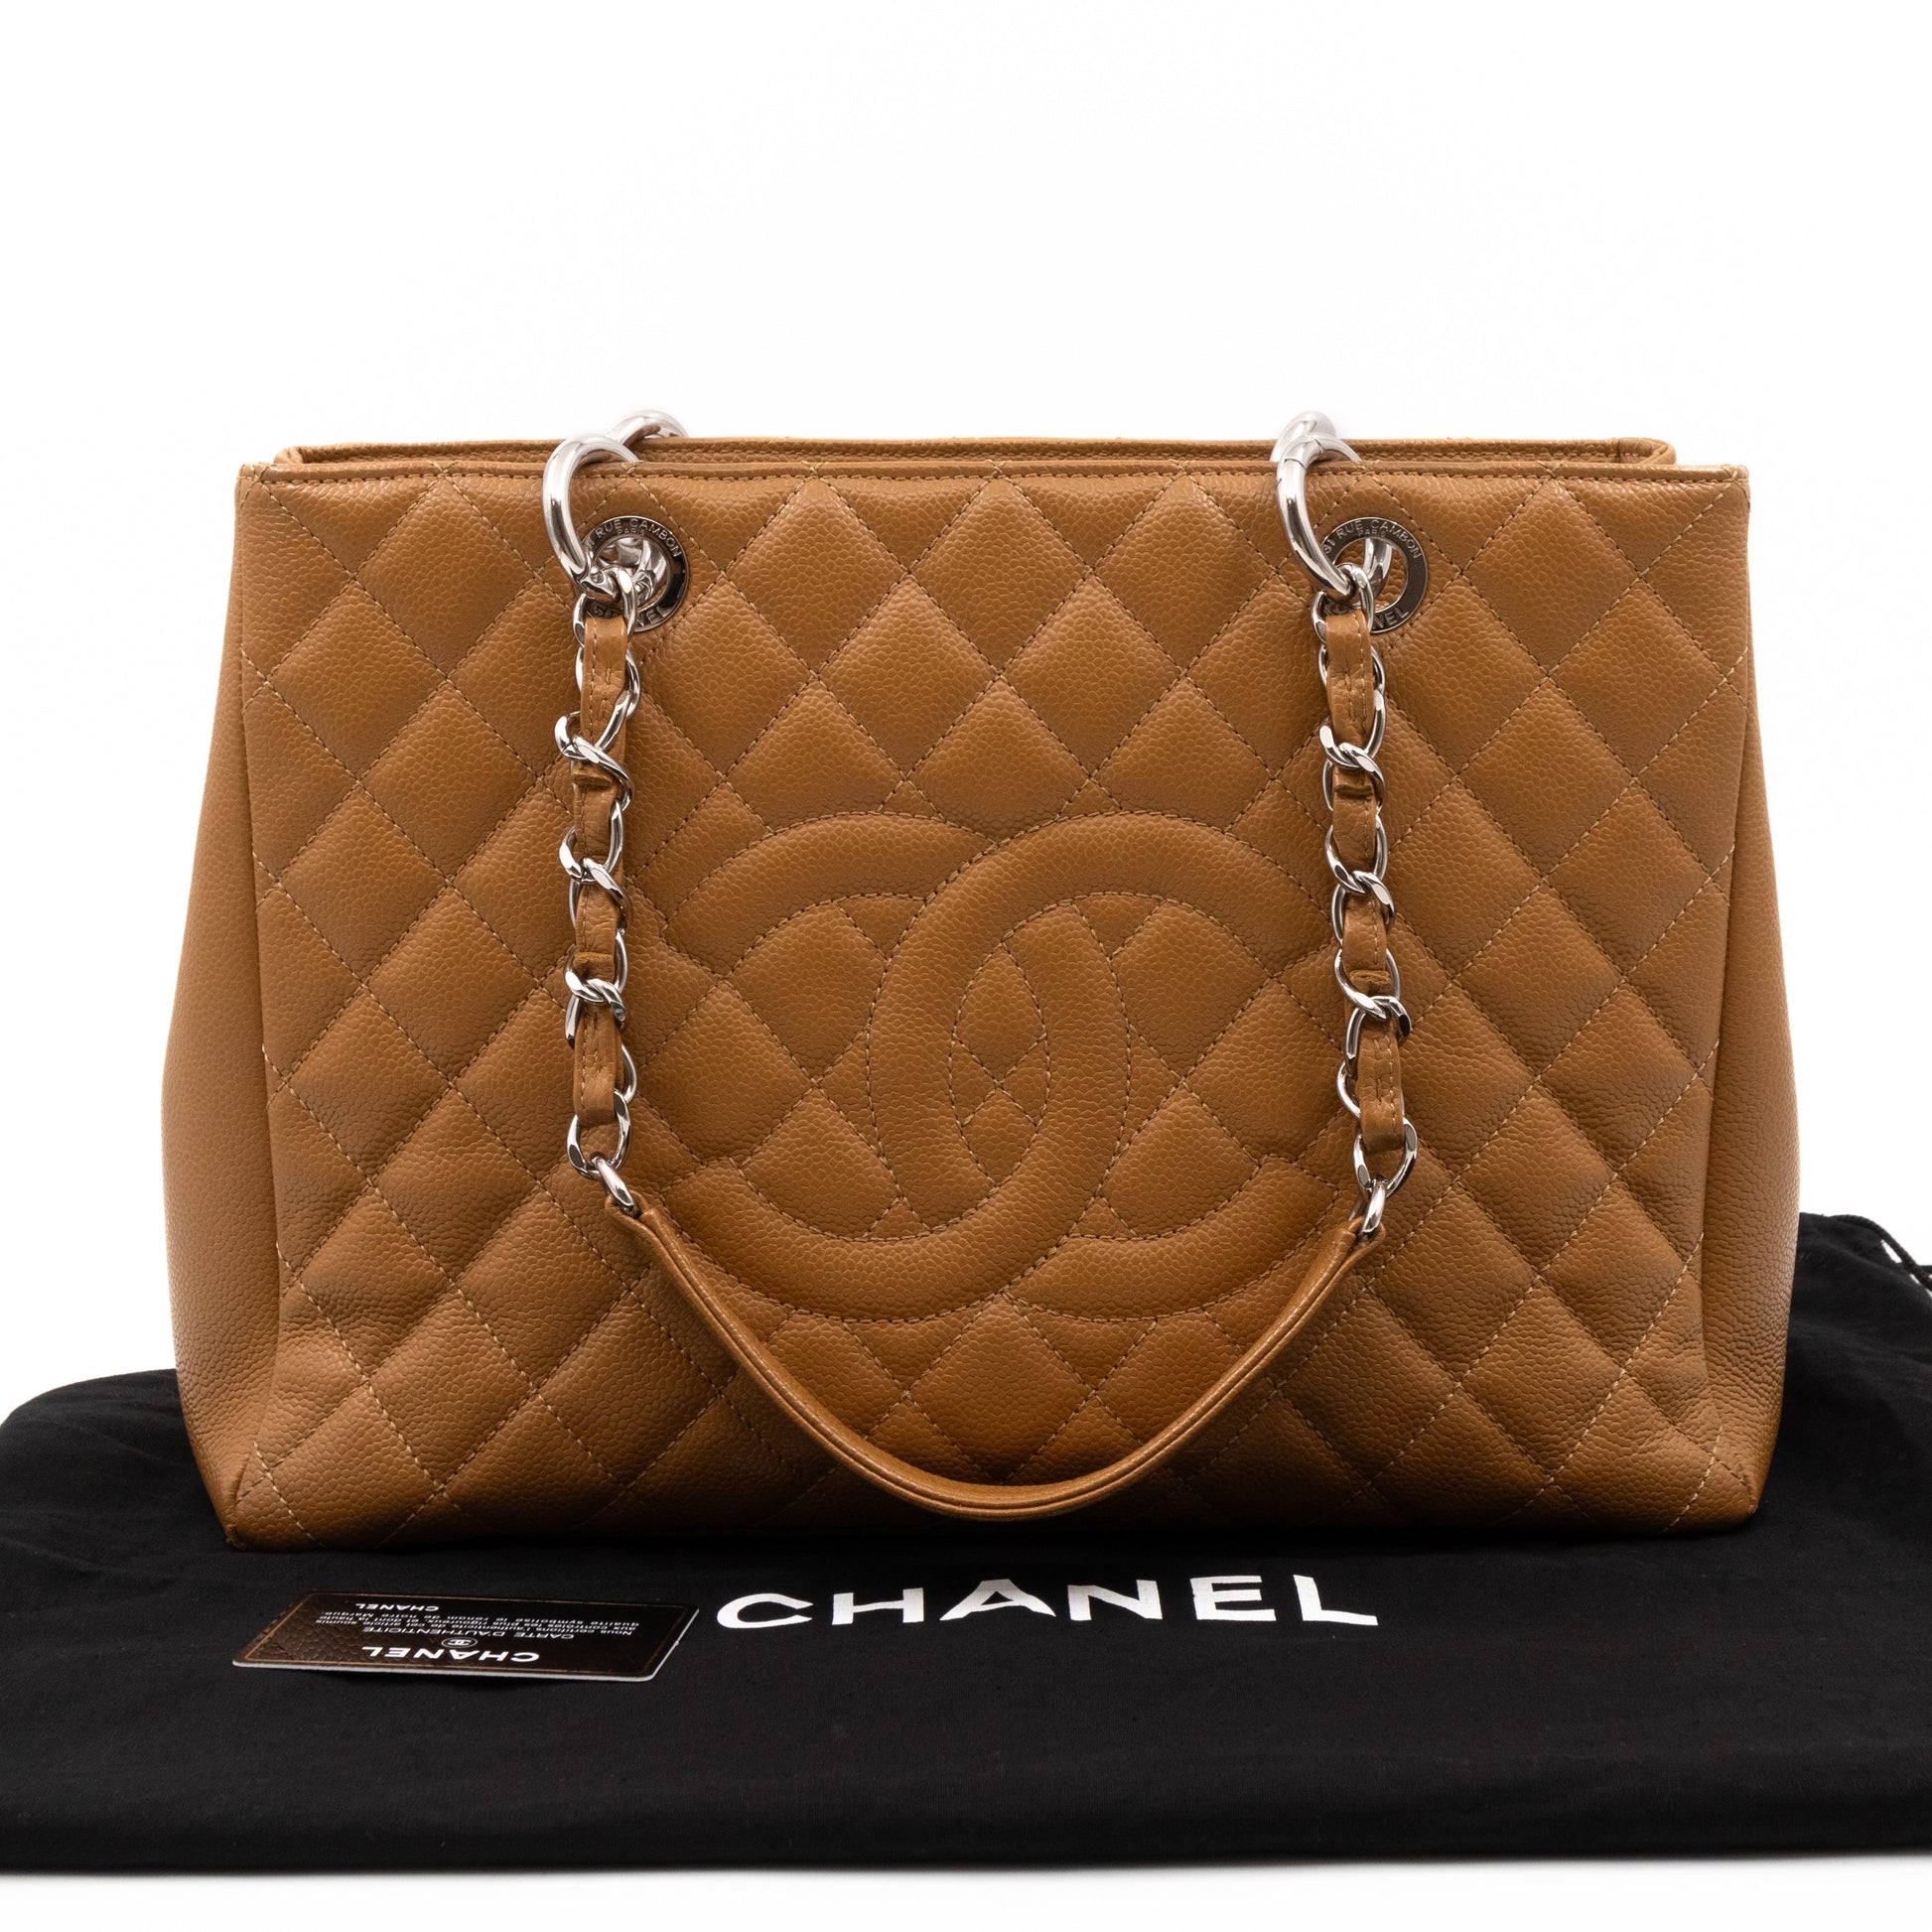 Chanel GST Beige Caviar Leather